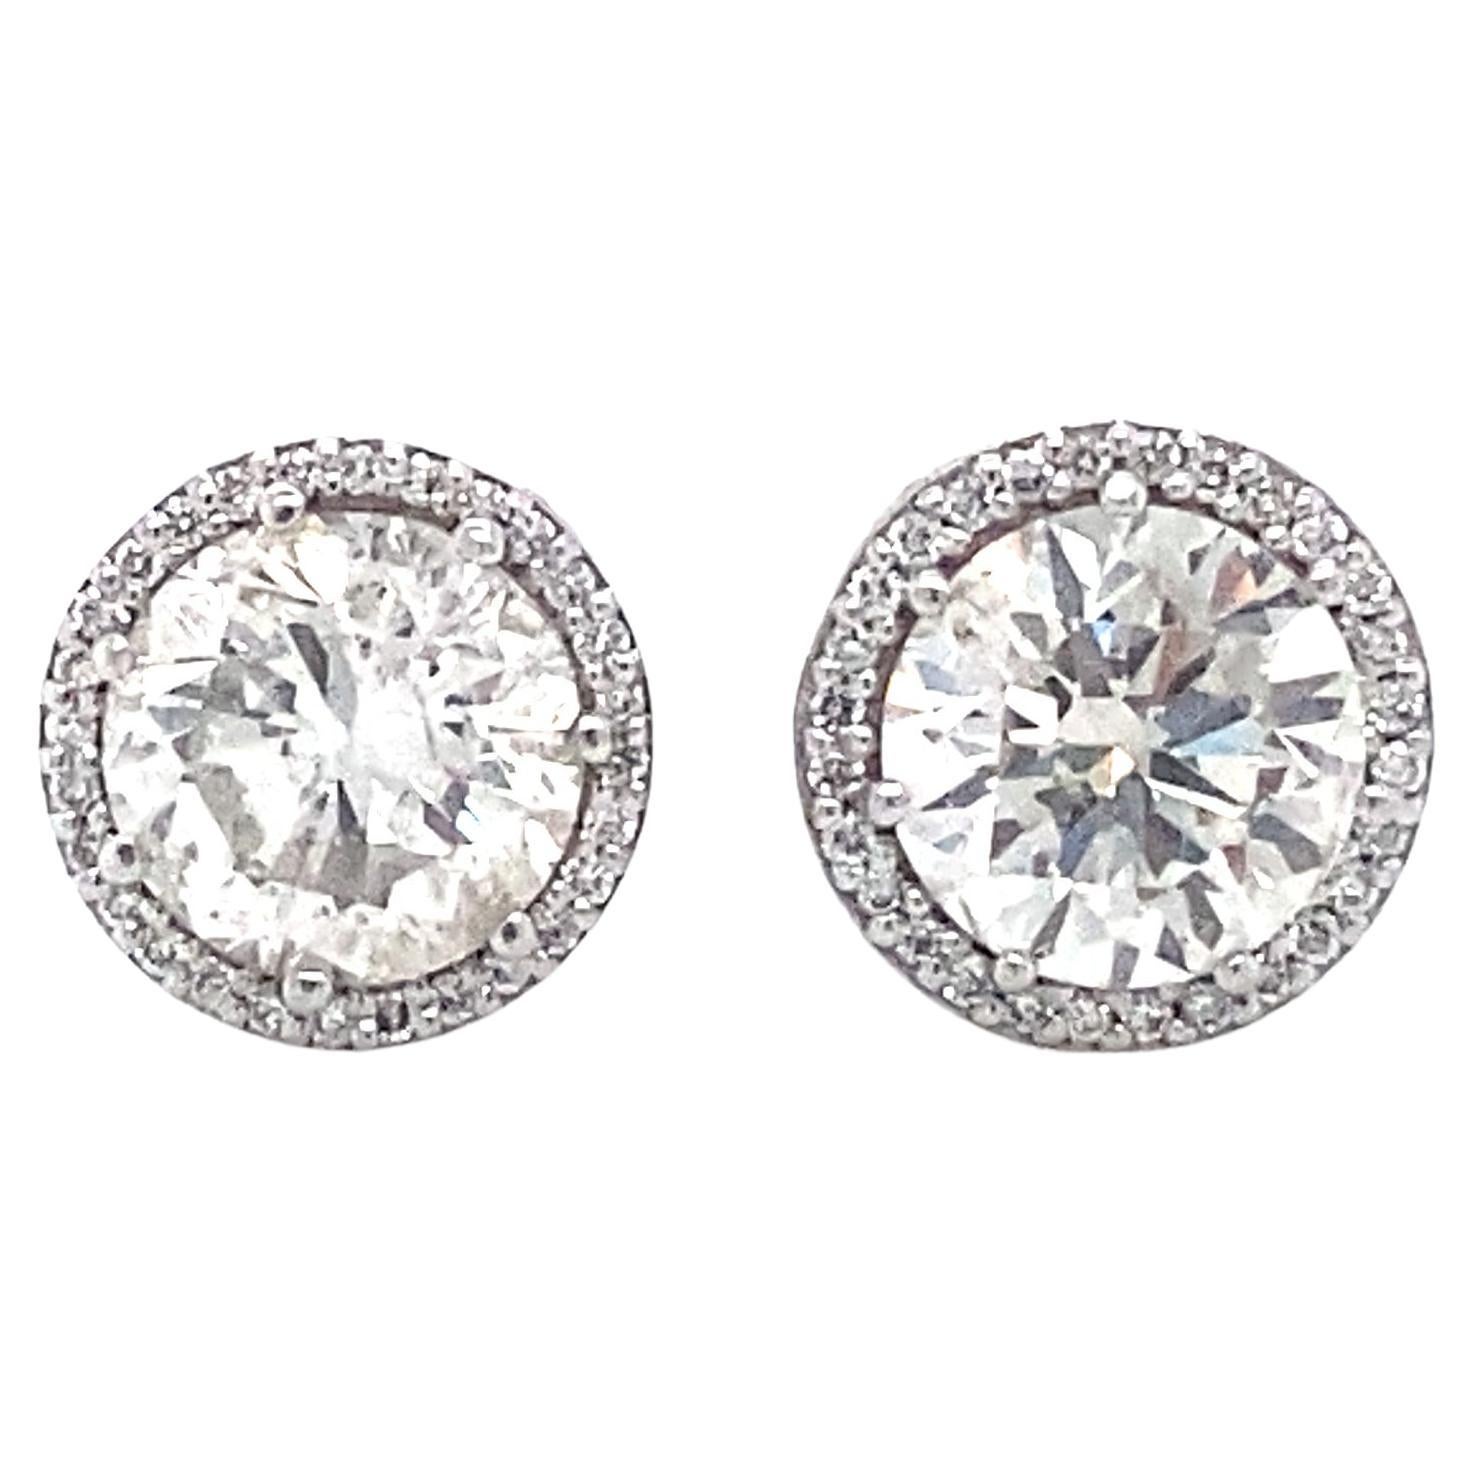 2.60 Carat Round Diamond Halo Stud Earrings in 14 Karat White Gold For Sale